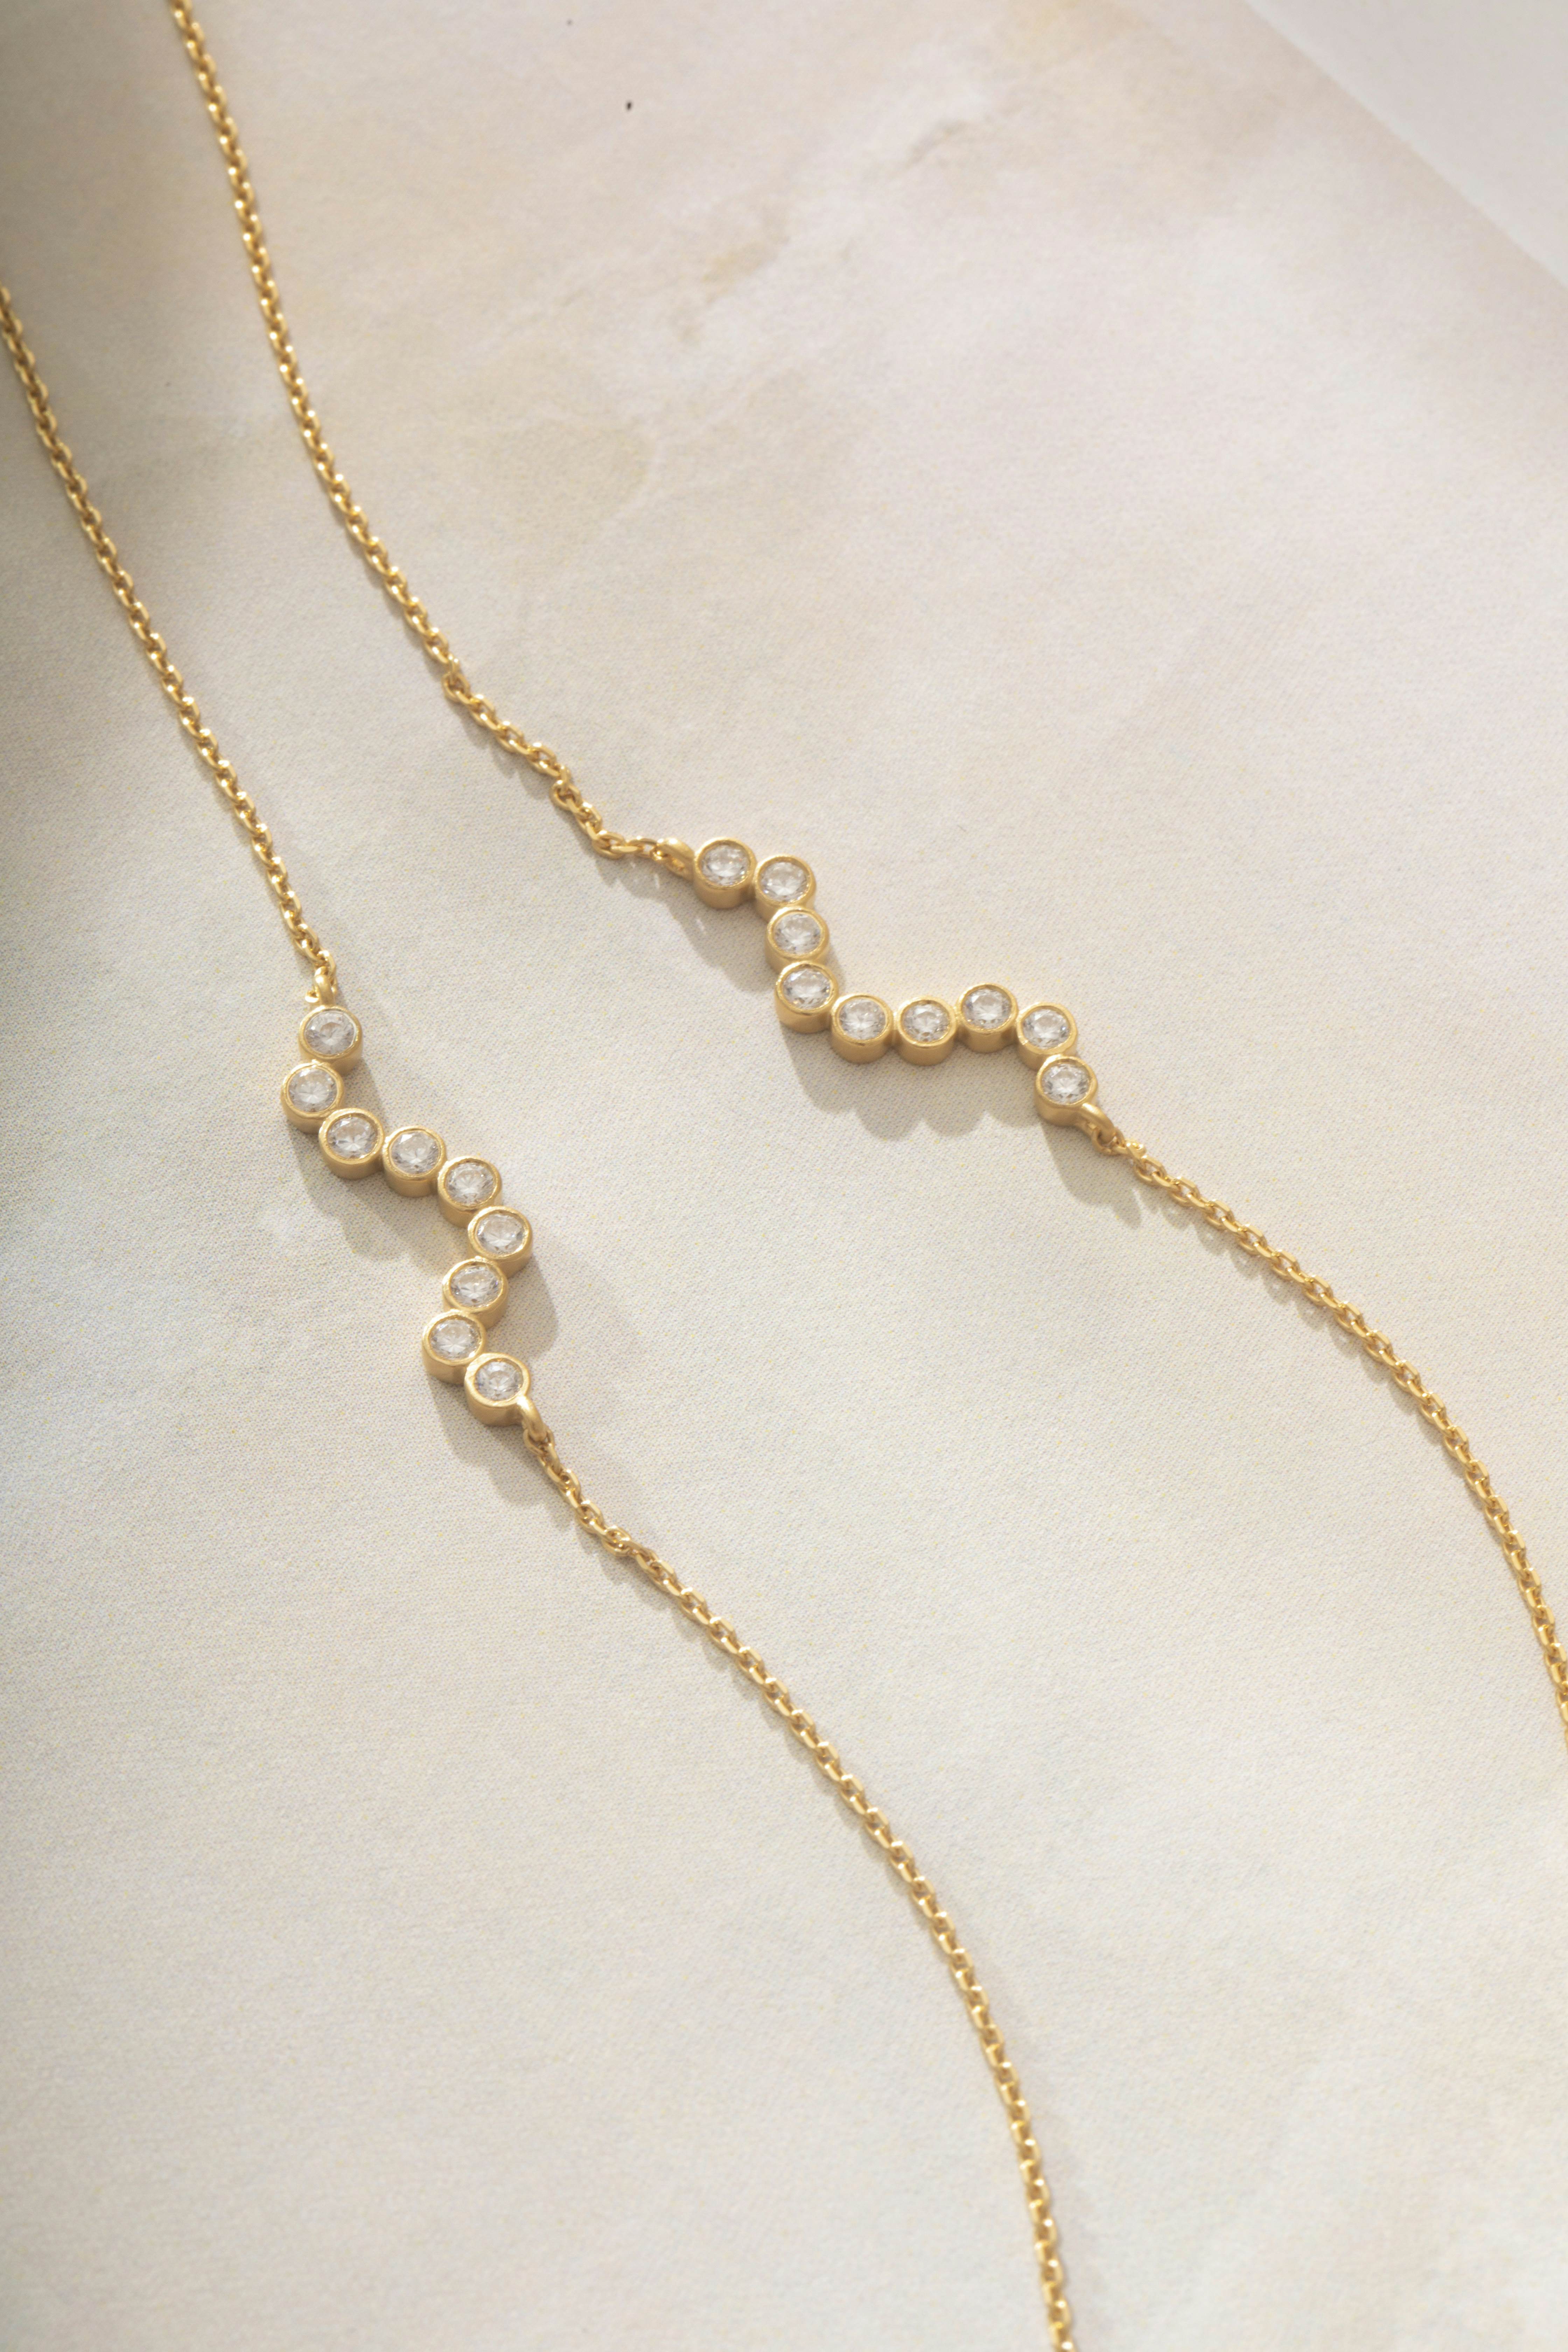 Midnight Sparkle Necklace fra STINE A Jewelry i Forgylt-Sølv Sterling 925